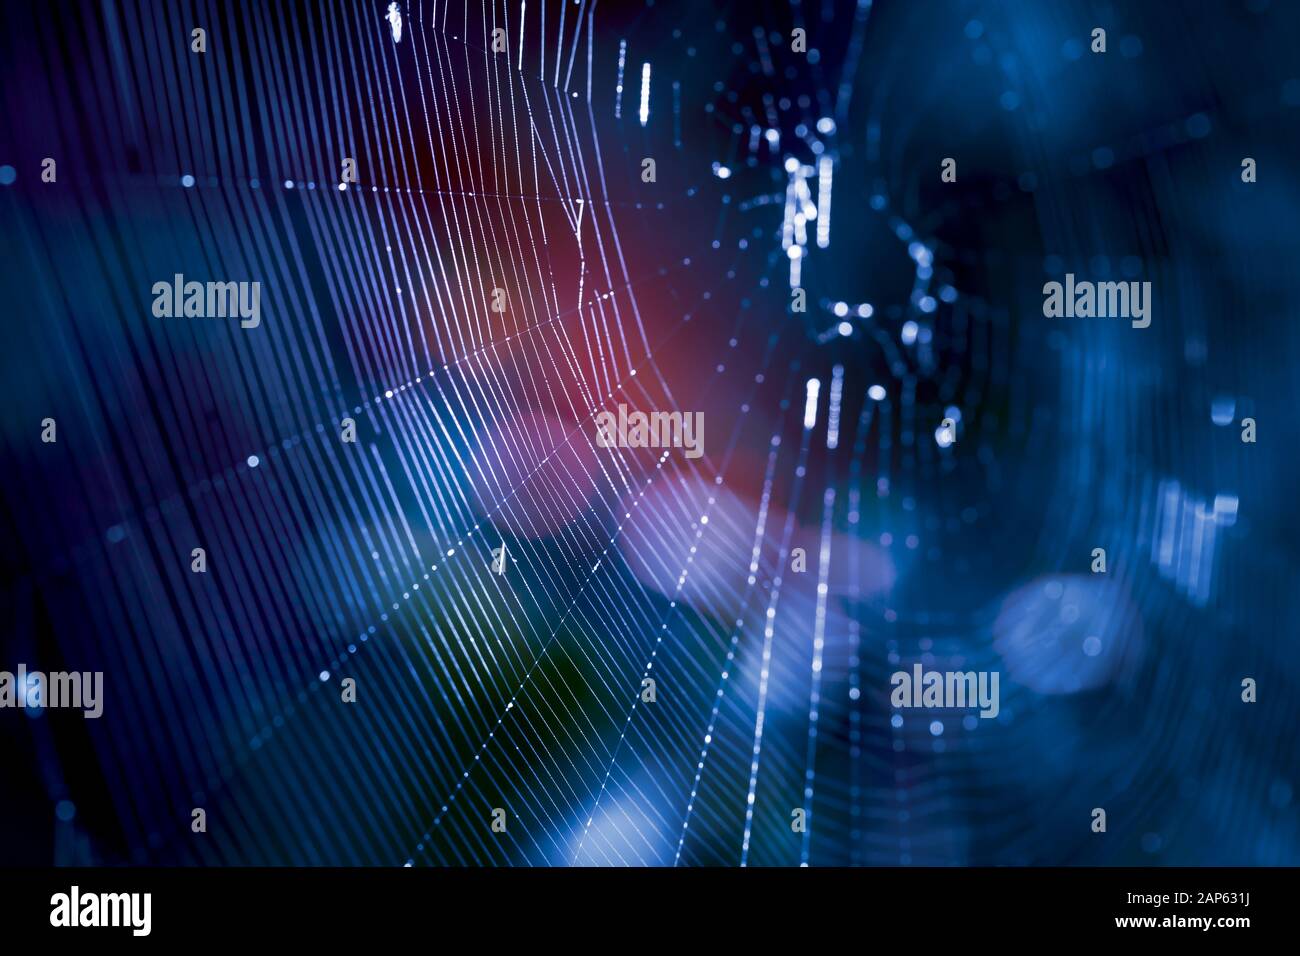 beauty design spider web spiderweb blue macro background cobweb technology hacker - stock image Stock Photo